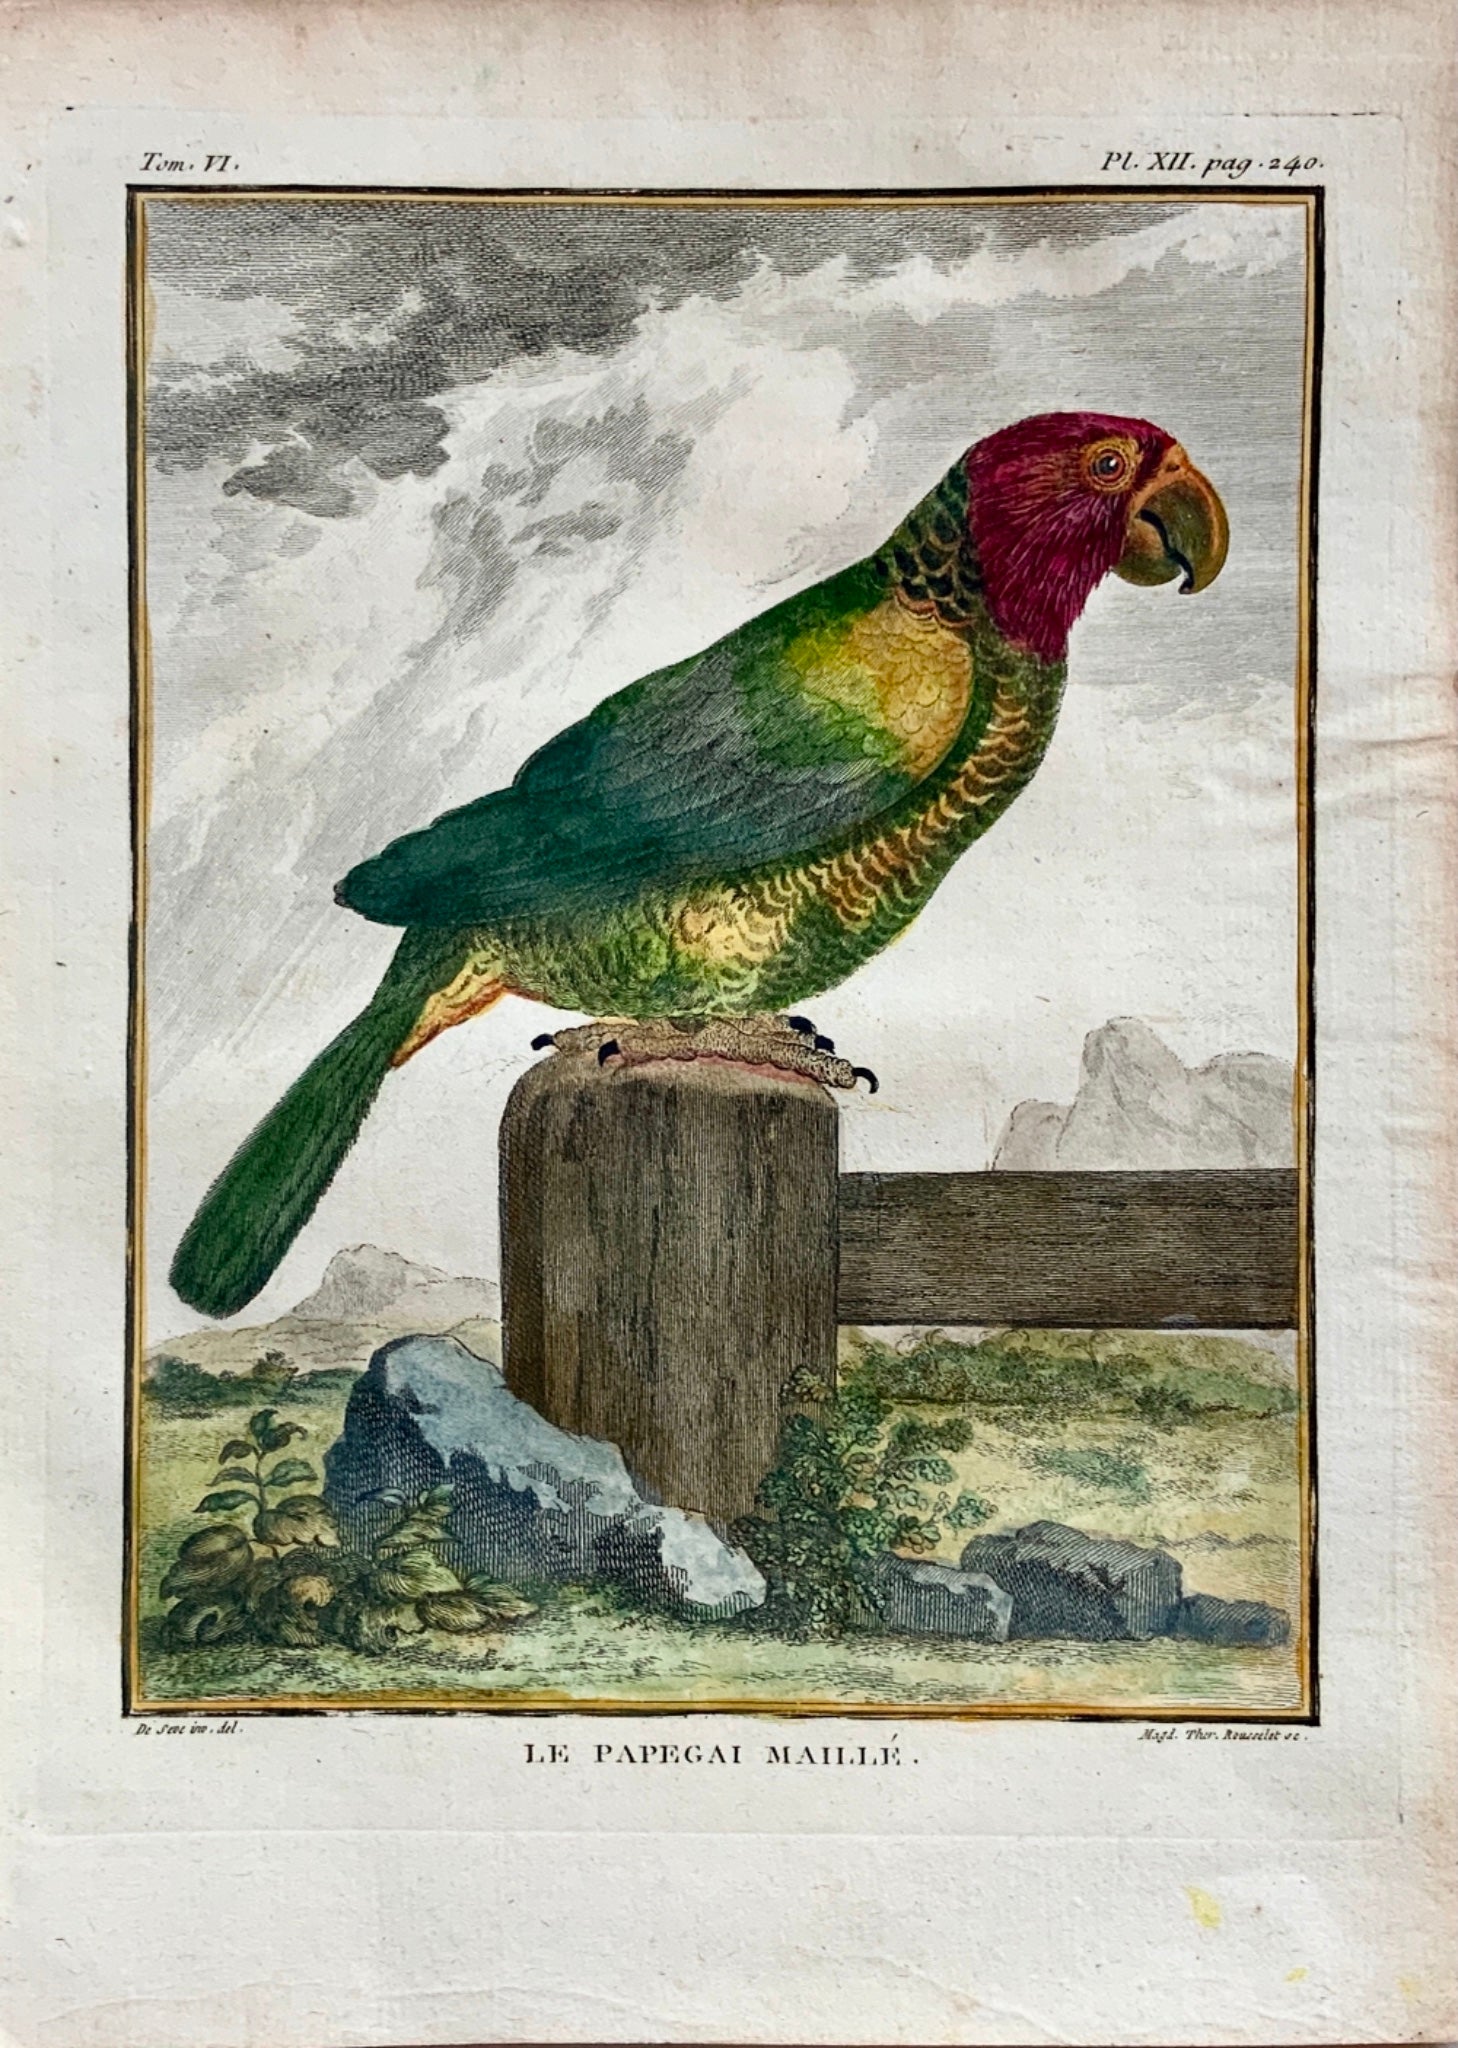 1779 Rousselet after Jacques de Seve Red-fan PARROT Ornithology - 4to engraving